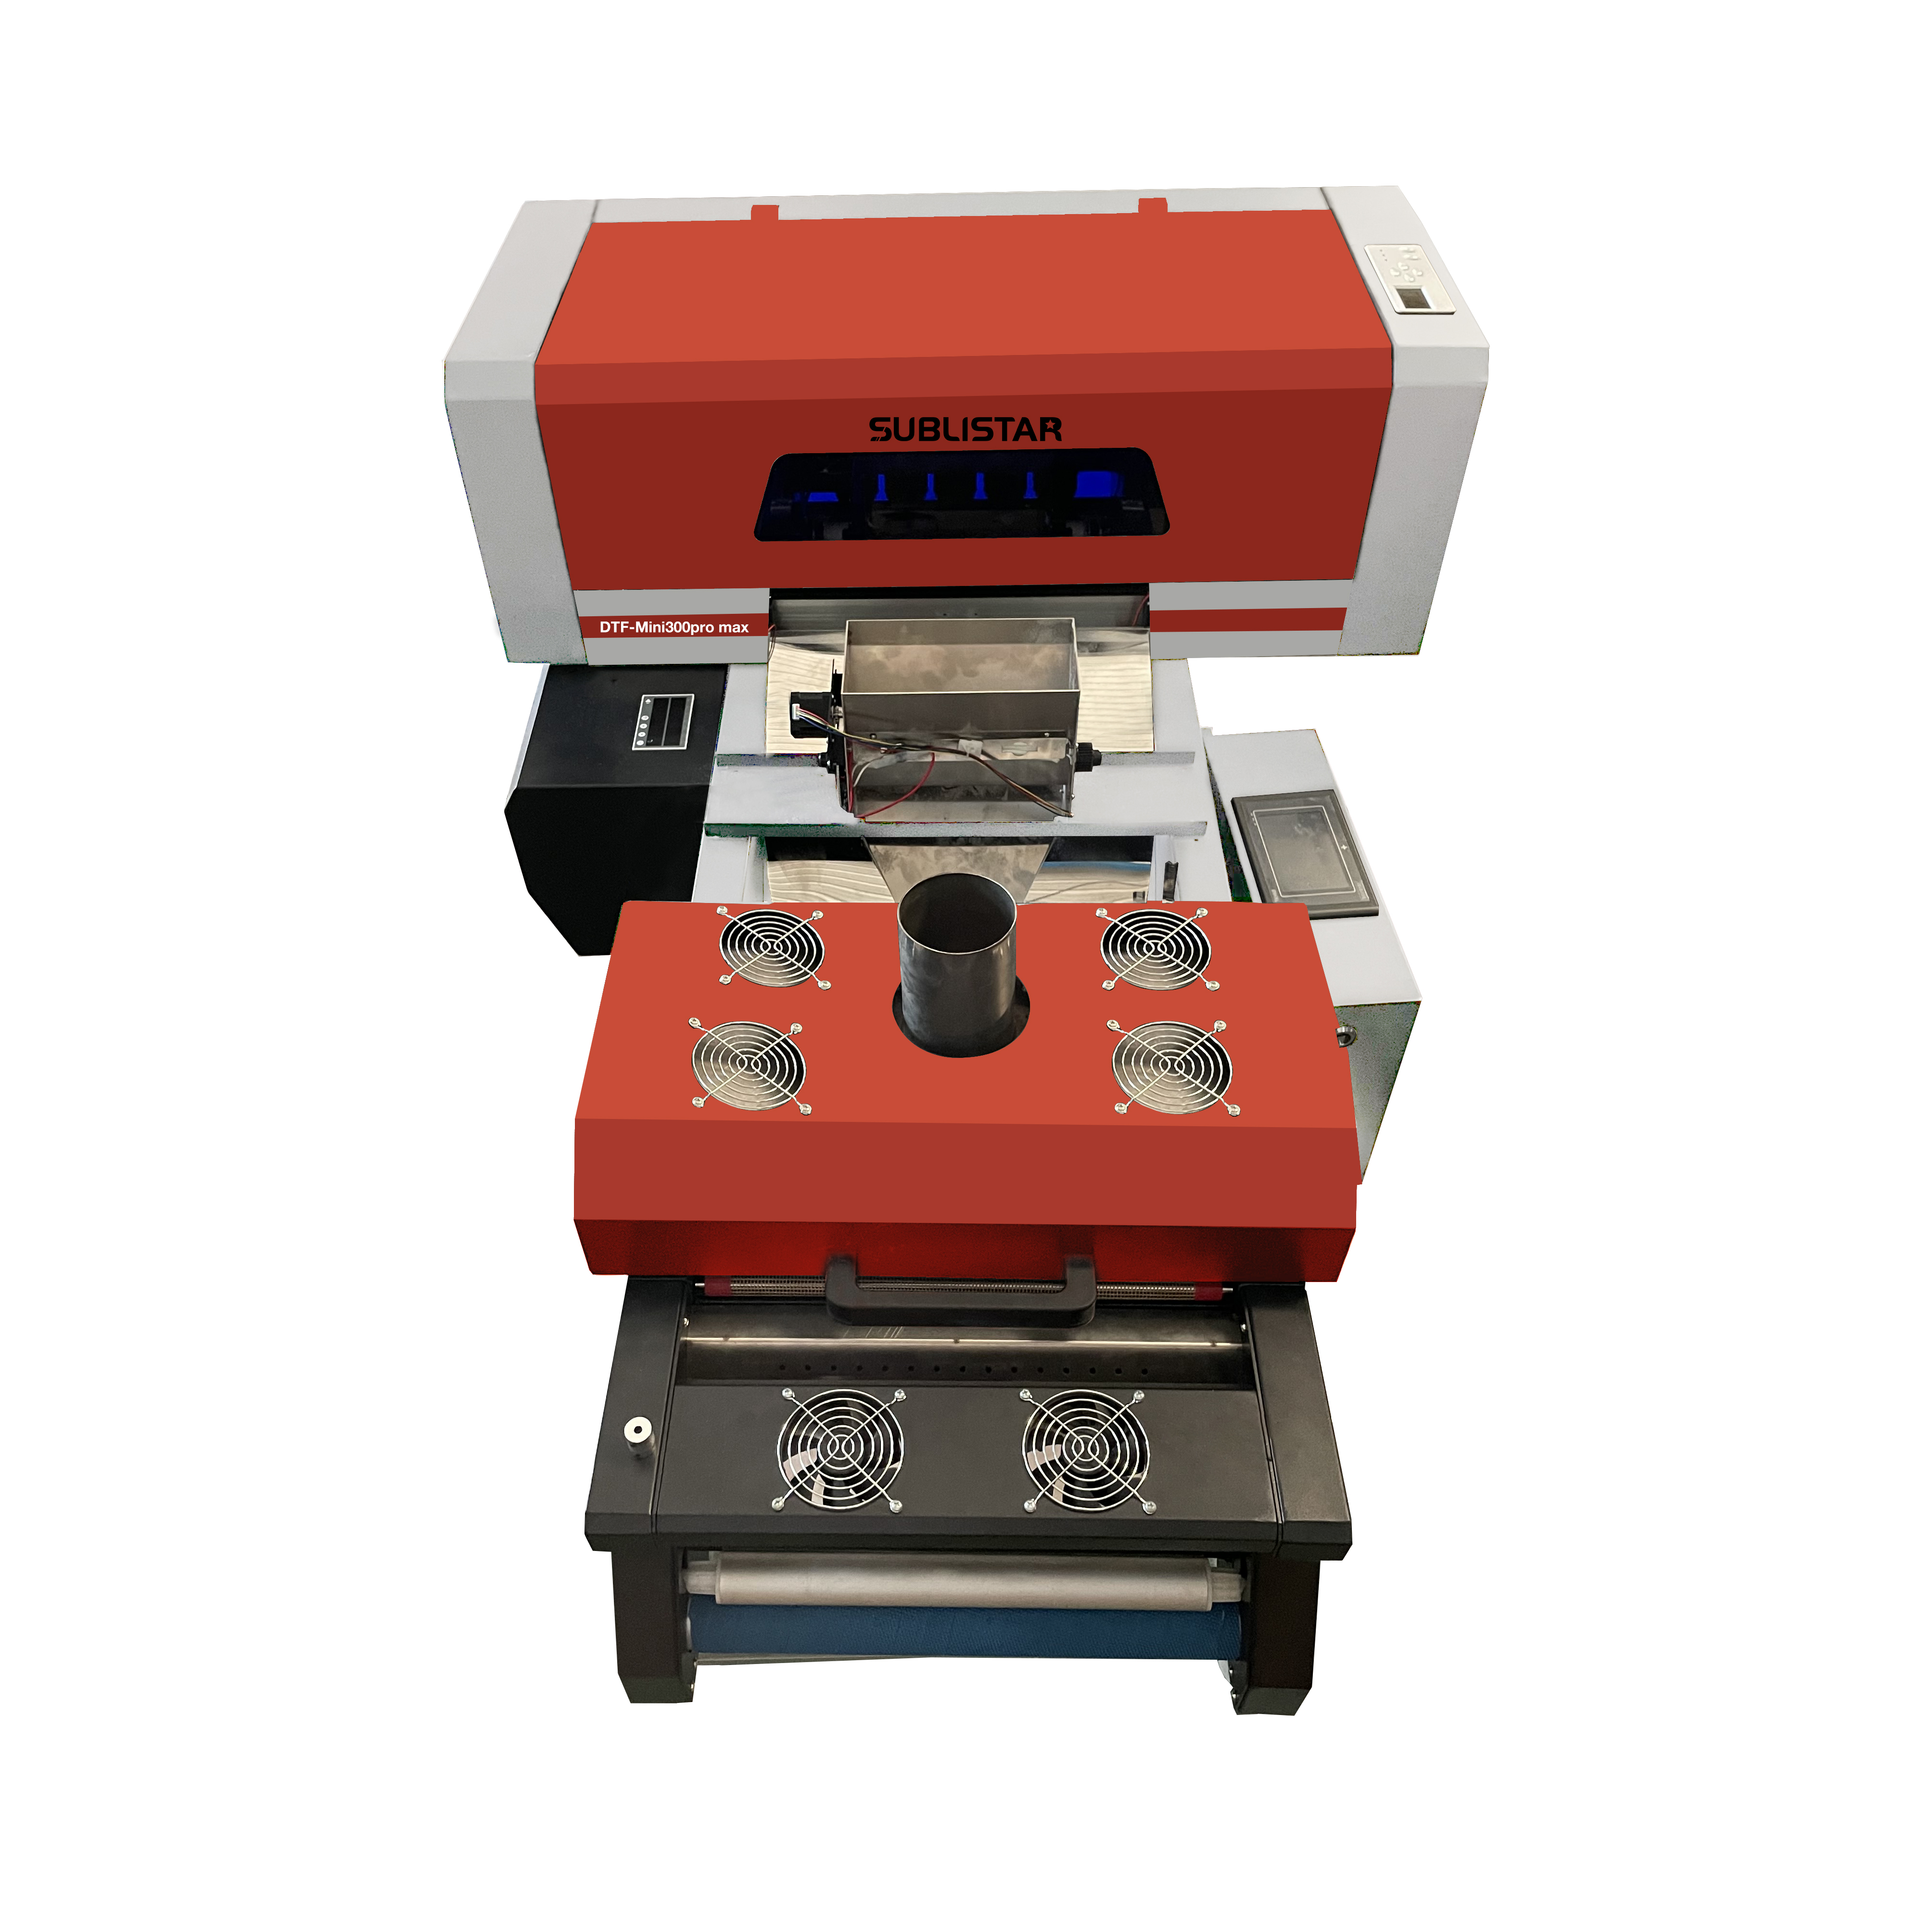 300mm DTF PET Film Printer with Dual XP600 Printheads